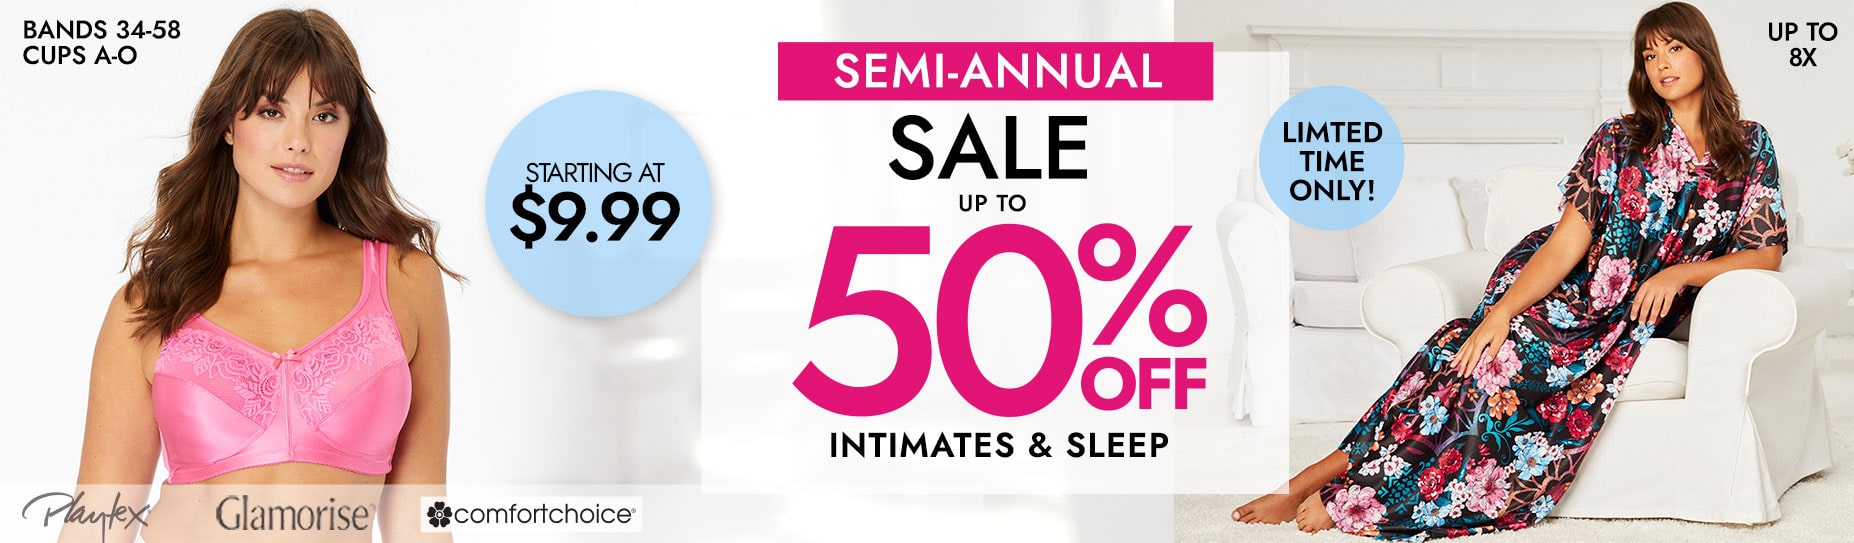 Semi-Annual sale up to 50% Off intimates & sleep